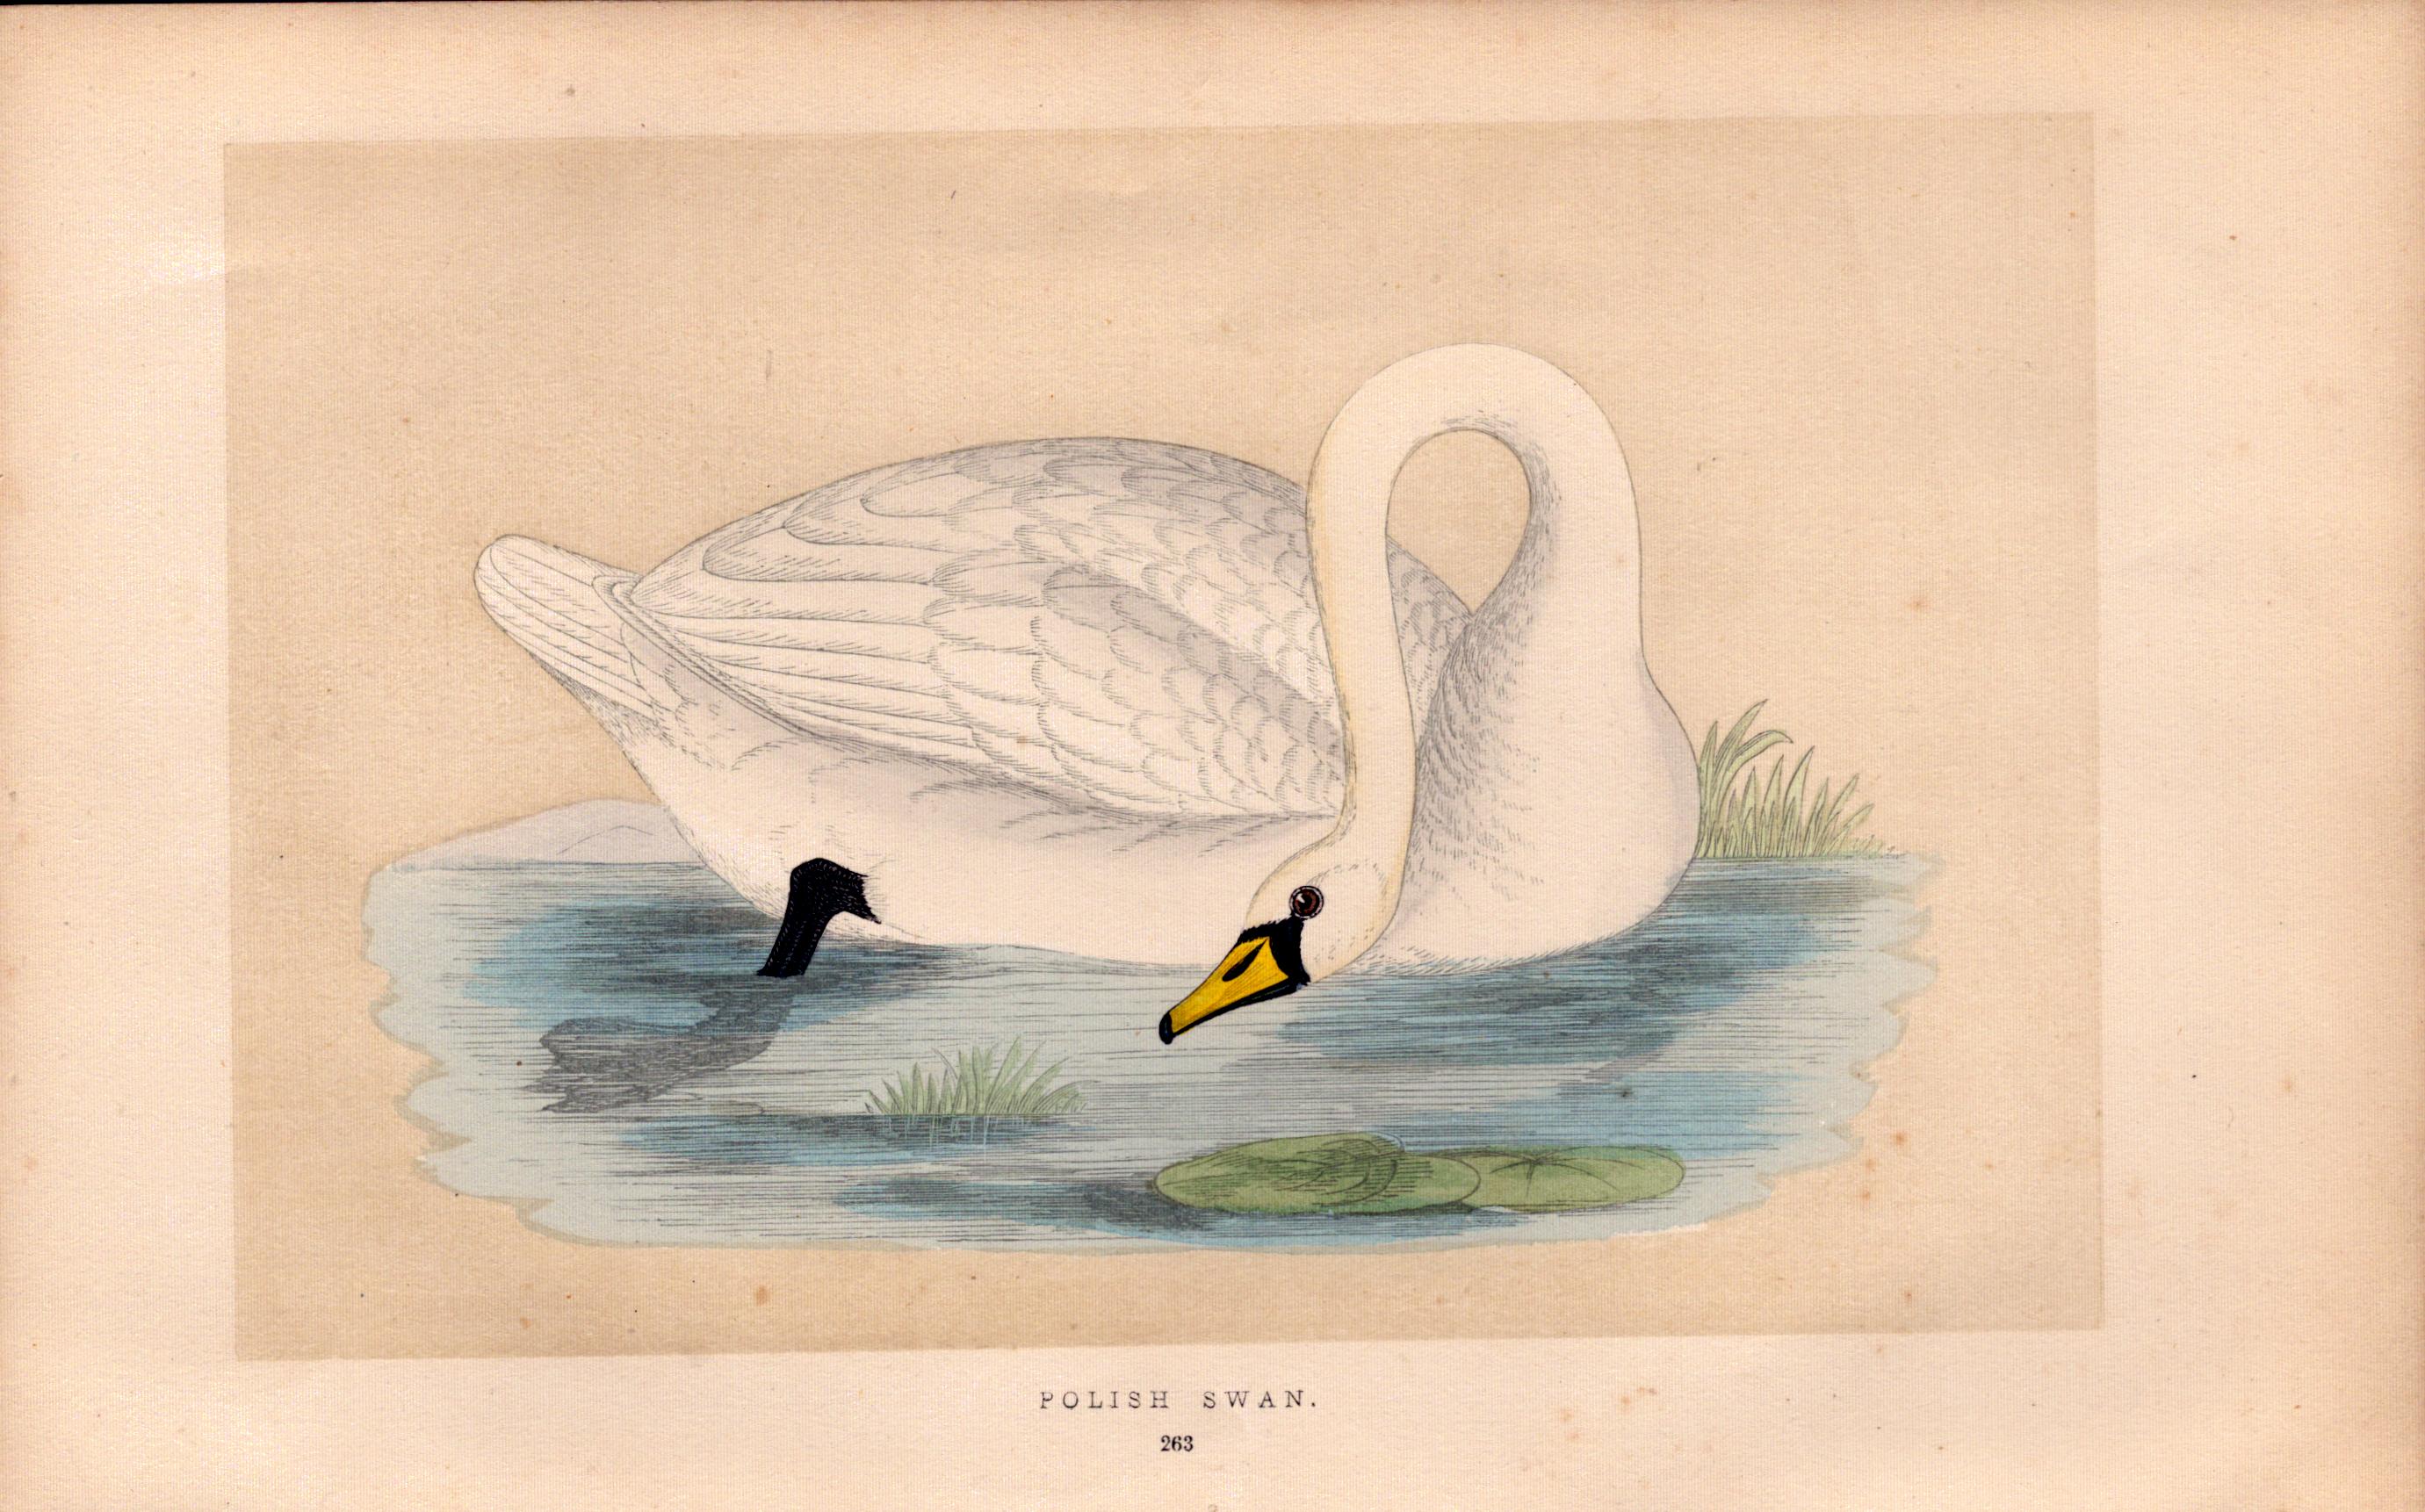 Polish Swan Rev Morris Antique History of British Birds Engraving.